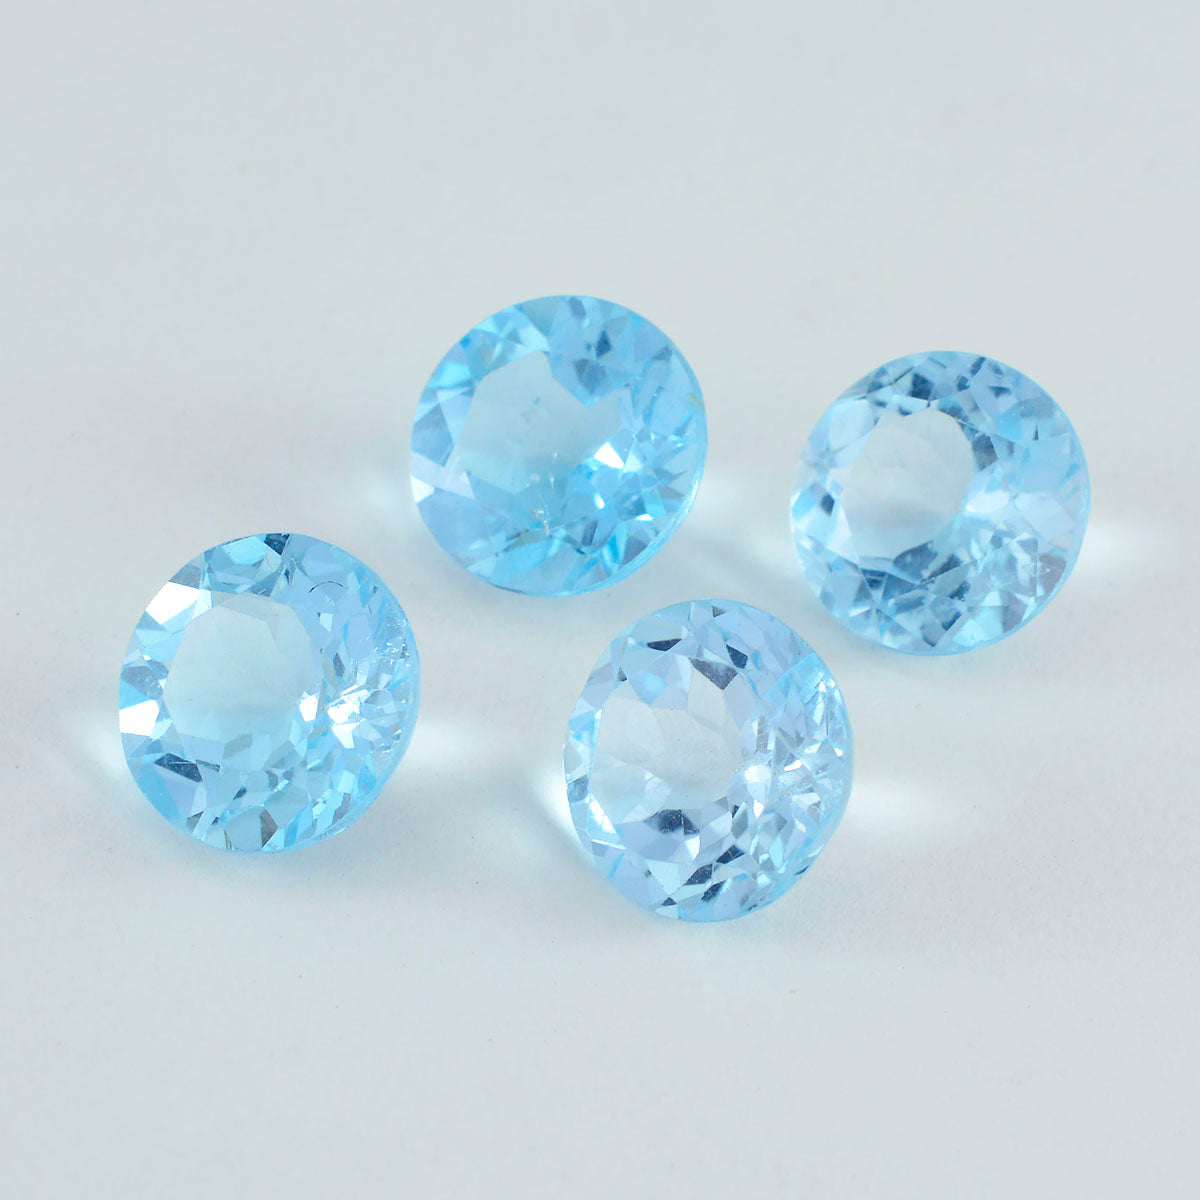 Riyogems 1PC echte blauwe topaas gefacetteerd 12x12 mm ronde vorm AAA kwaliteit losse edelstenen